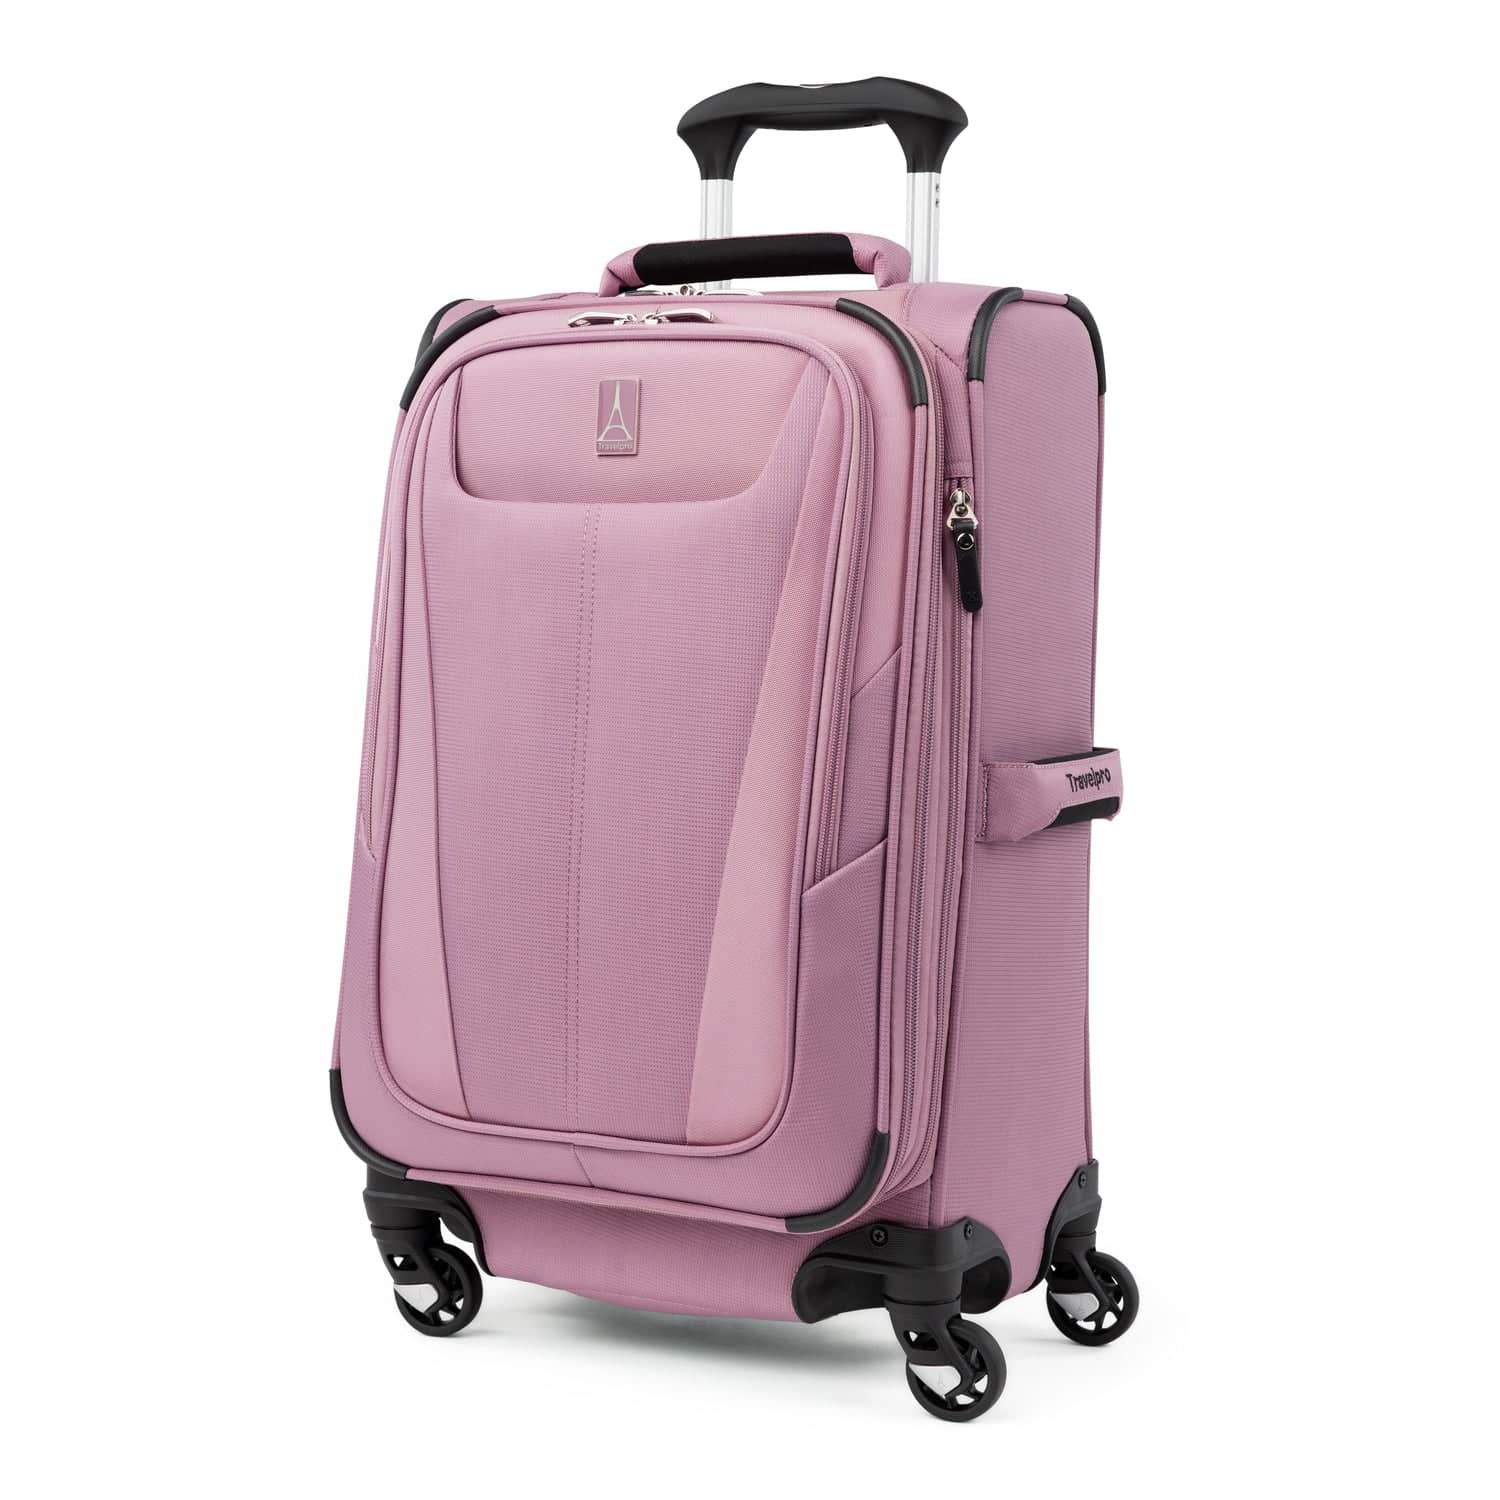 Retro Trolley Case Female Travel Suitcase Pink Cute Trolley